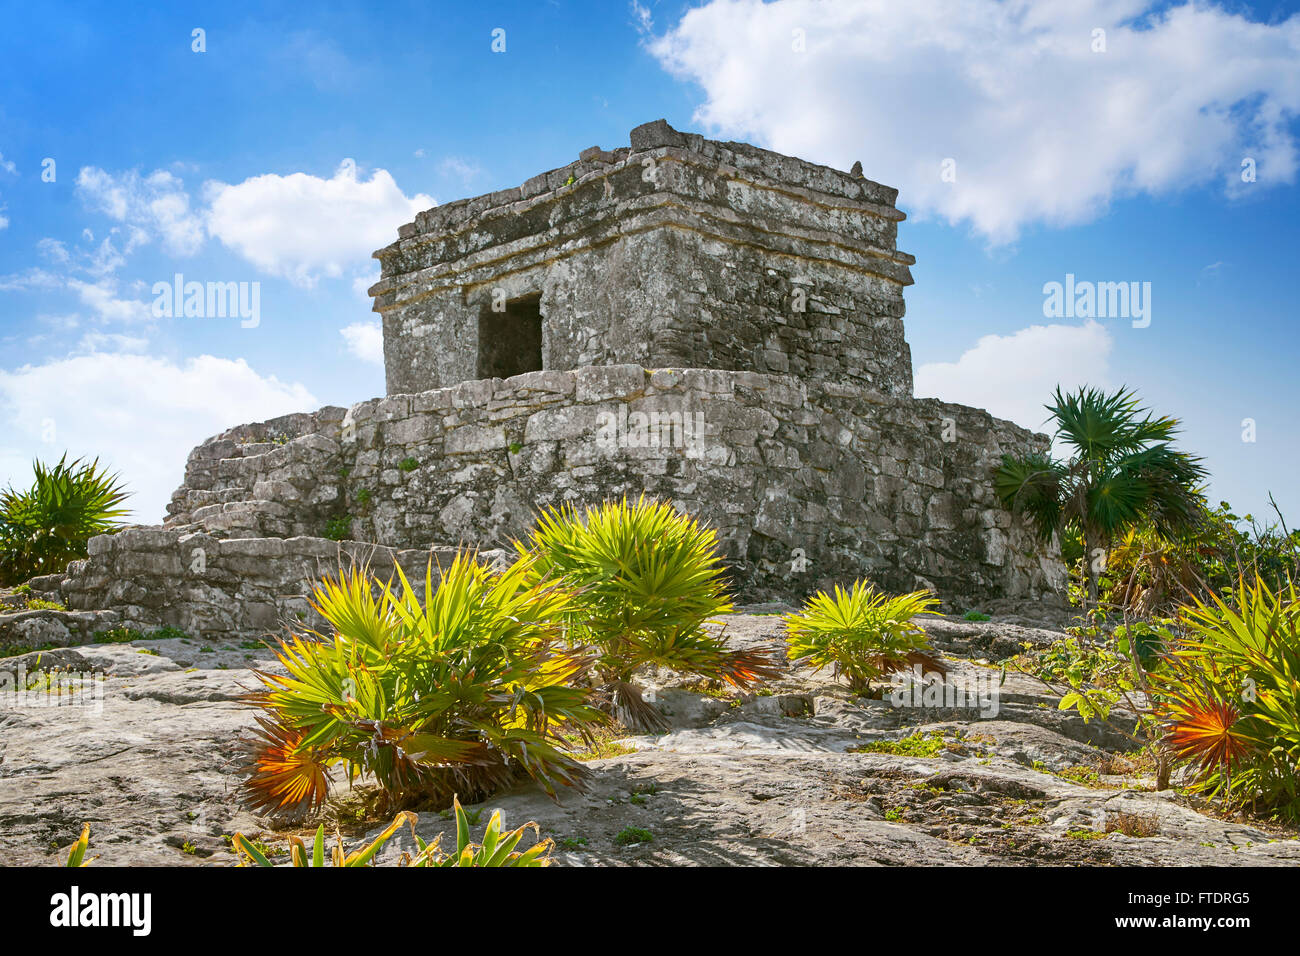 Ancient Maya Ruins, Main Temple of Tulum, Yucatan Peninsula, Mexico Stock Photo